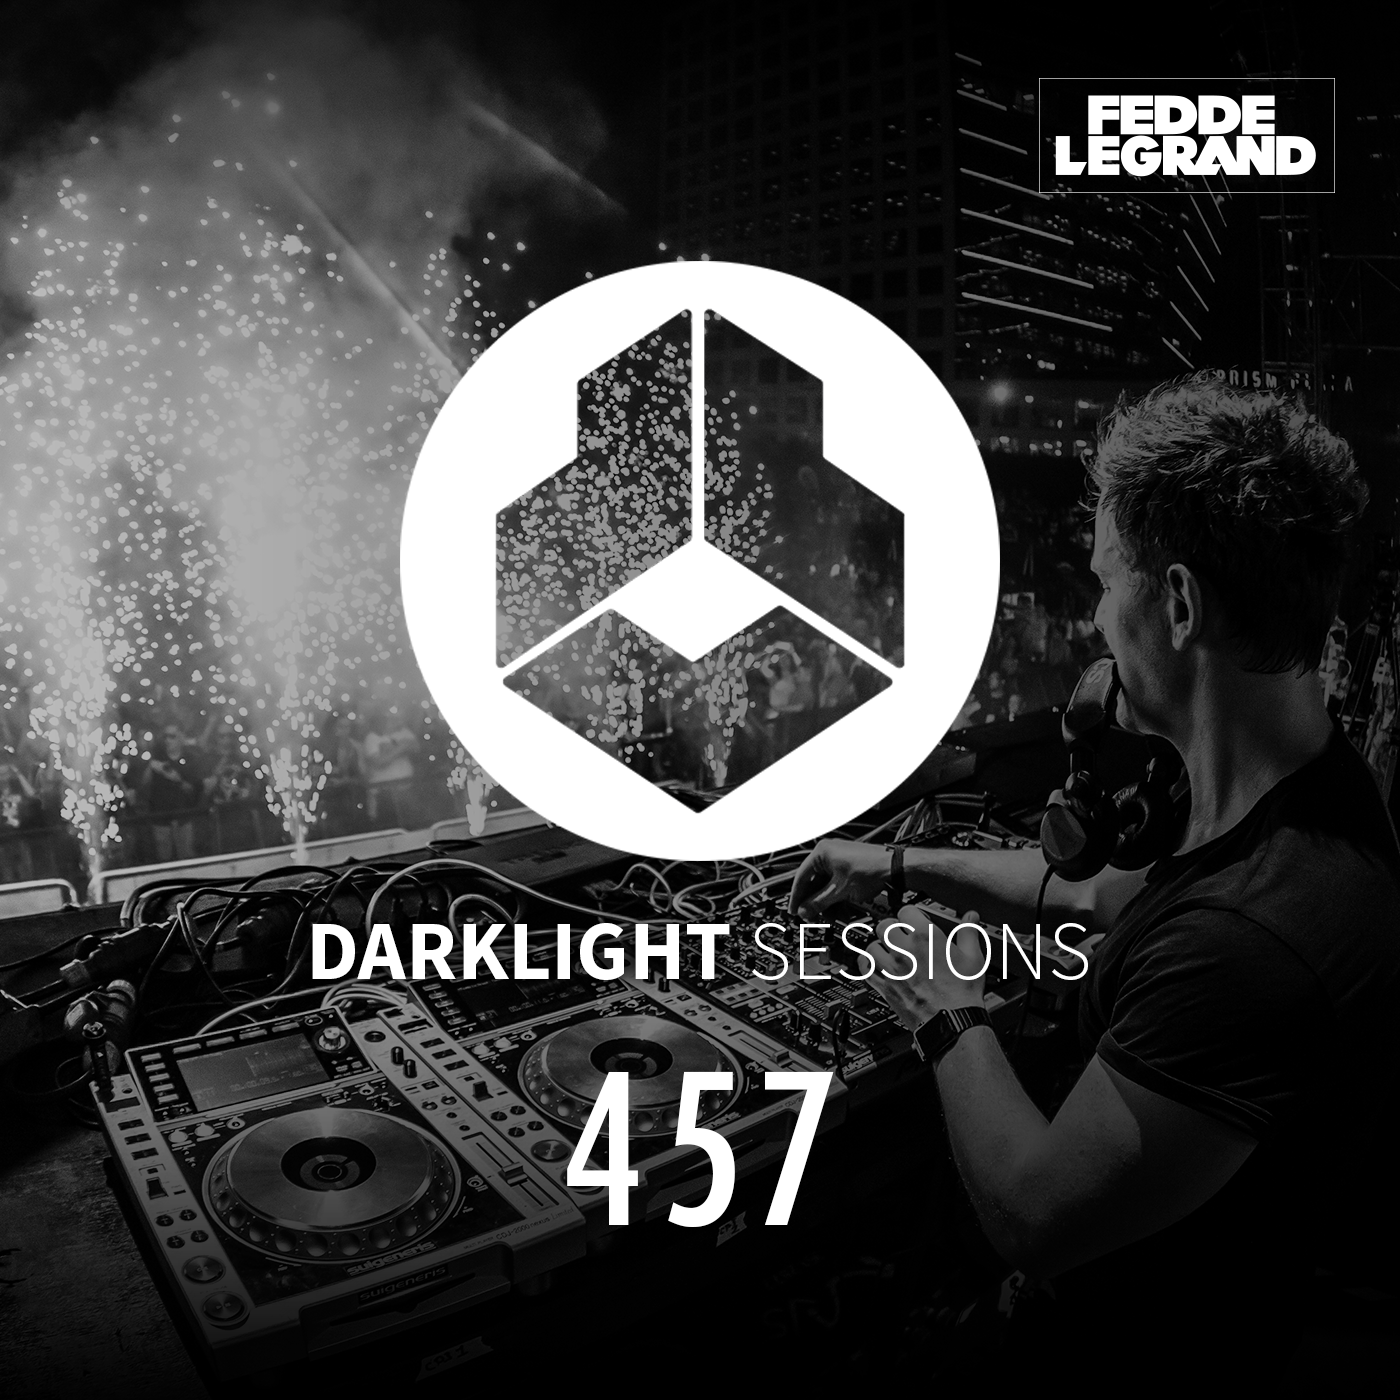 Darklight Sessions 457